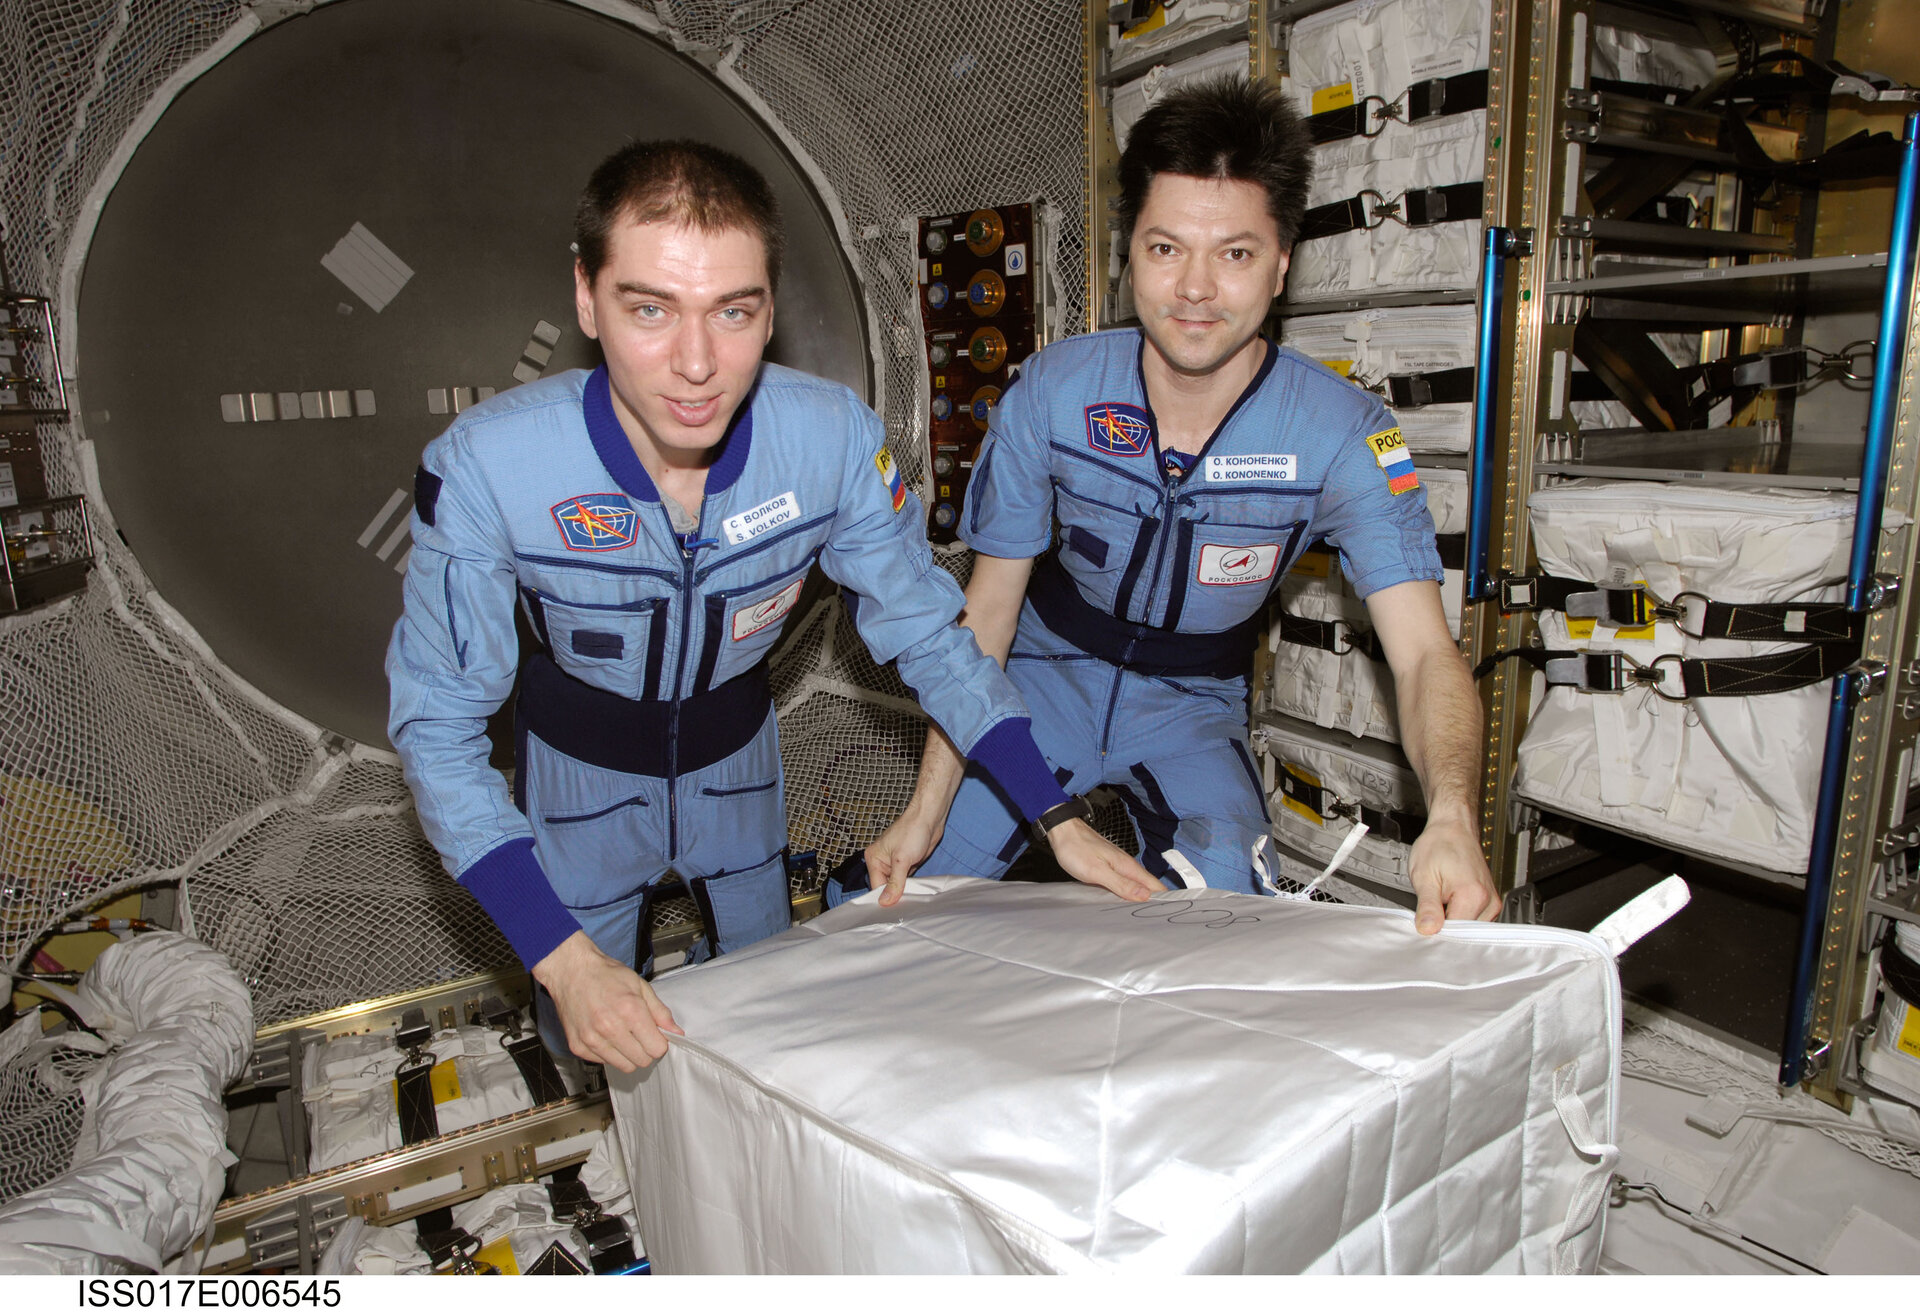 Expedition 17 crewmembers Volkov and Kononenko inside ATV